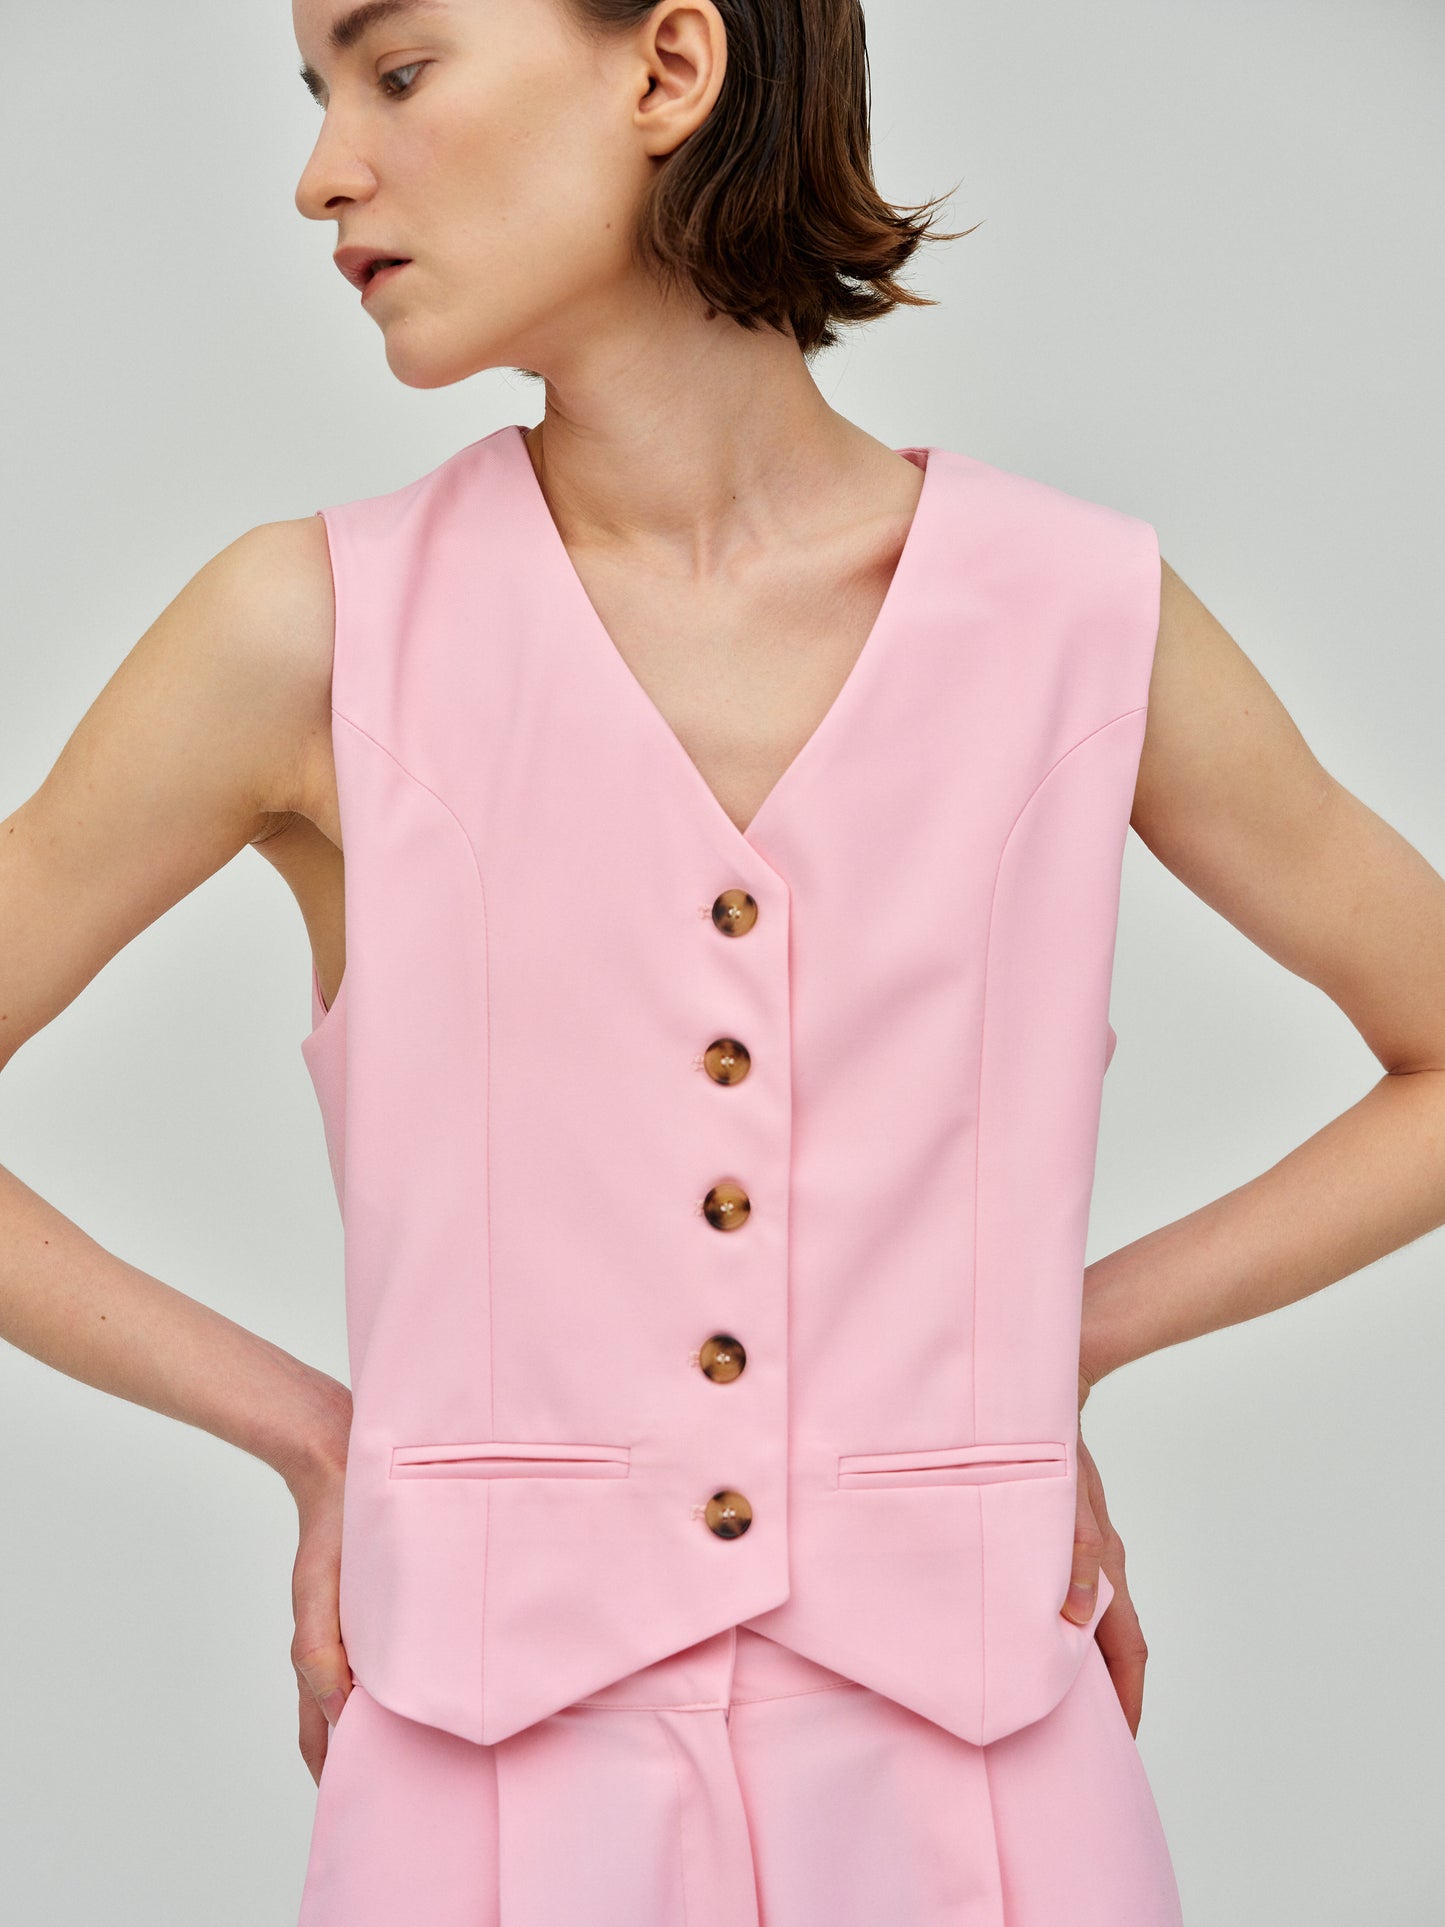 Tailored Suit Waistcoat, Pink